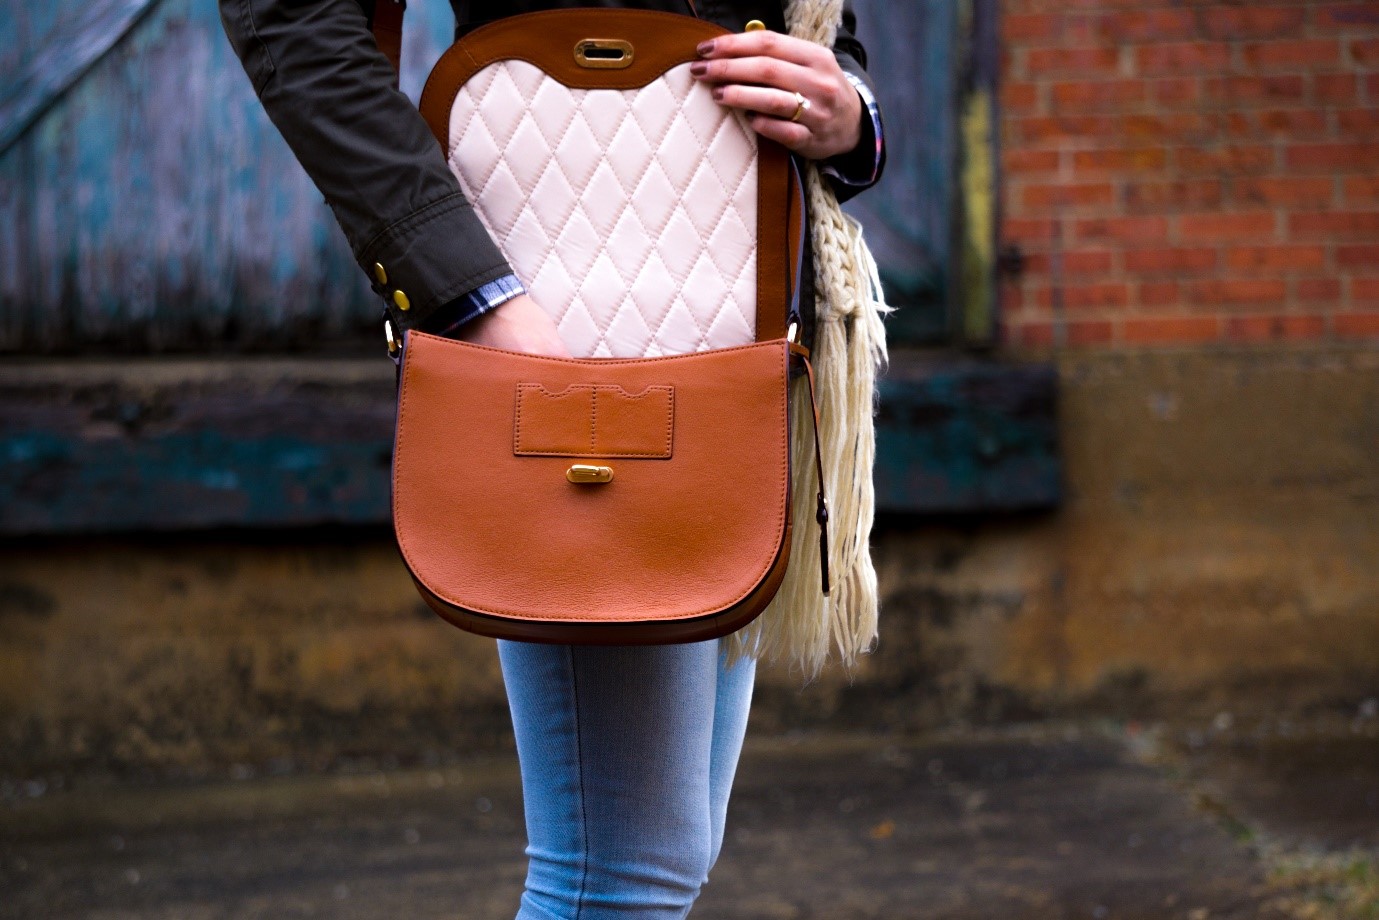 Leather handbags for women